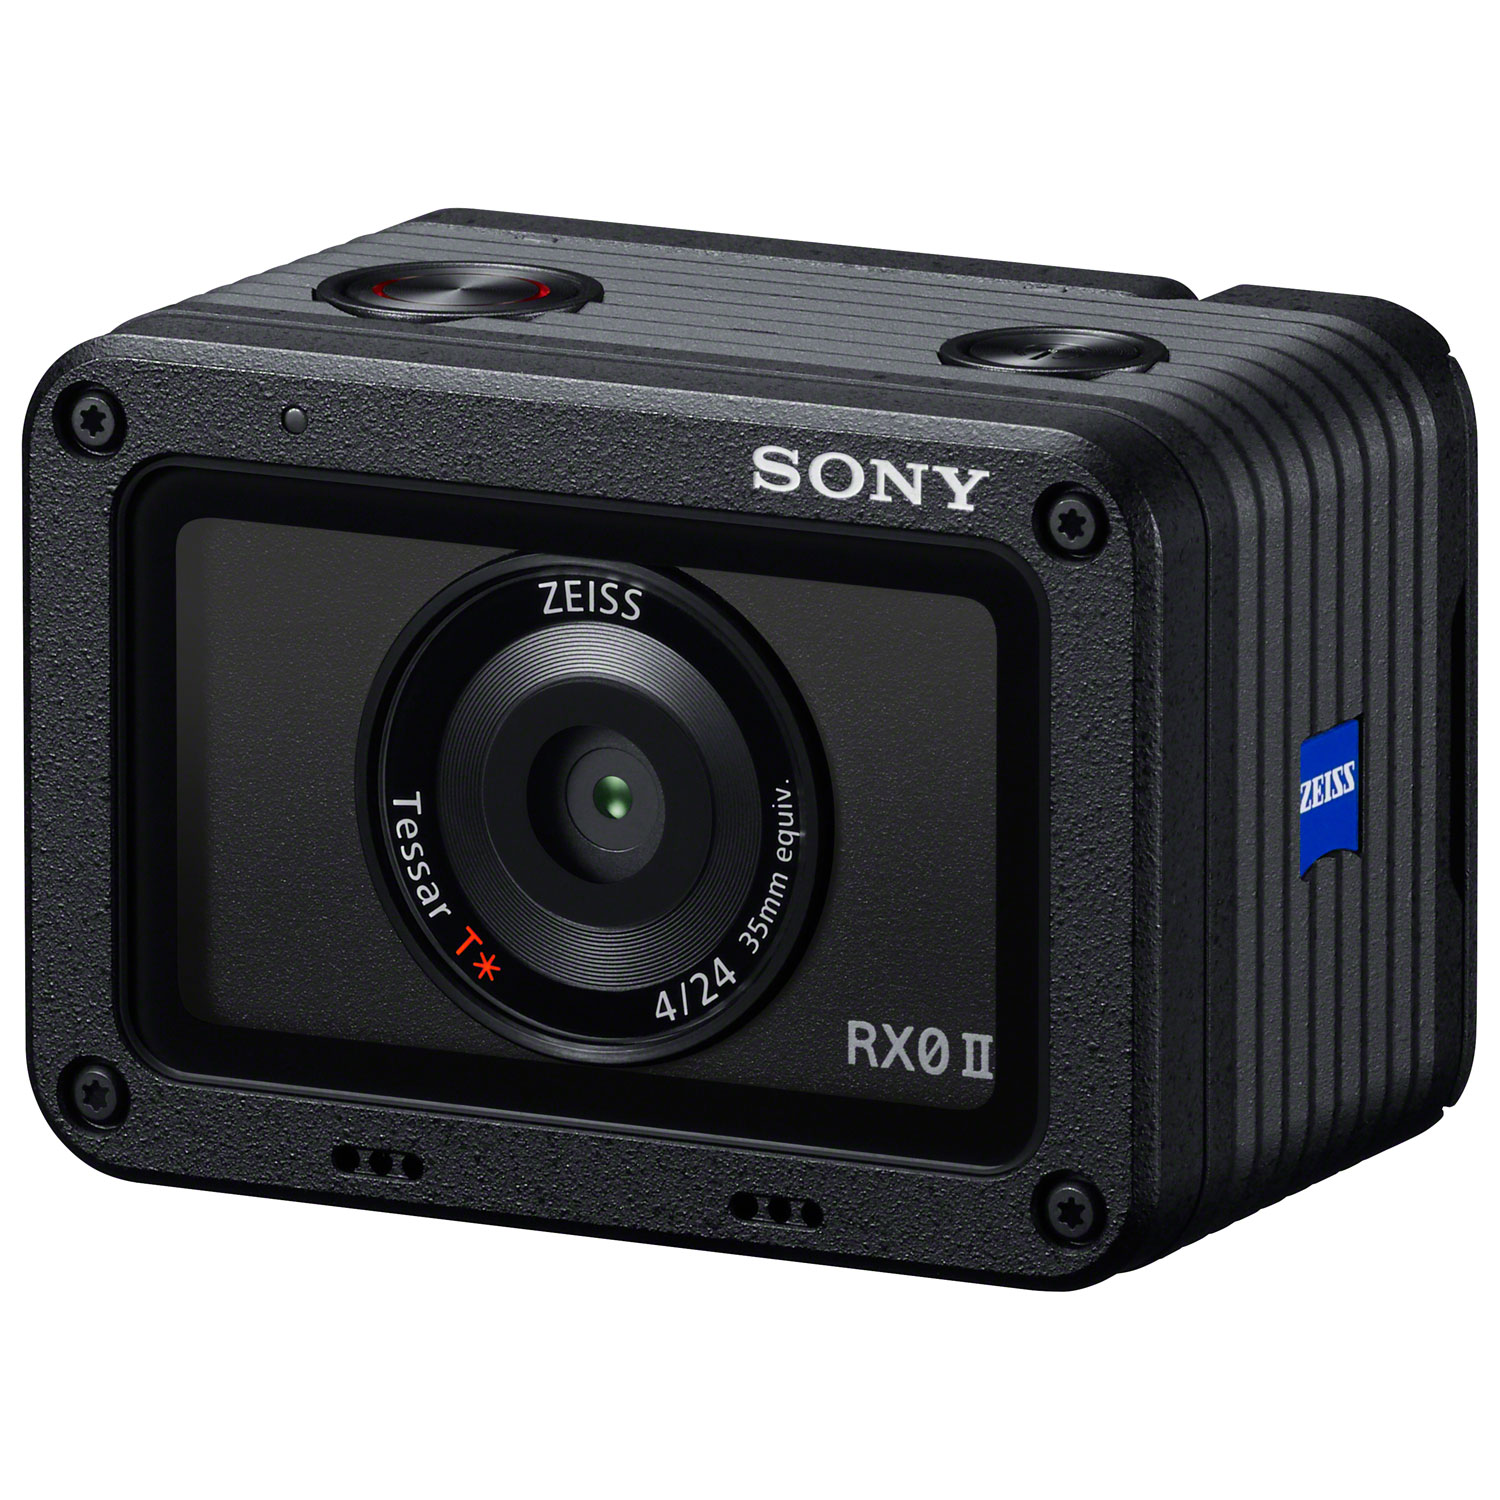 Sony RX0 II 15.3MP Waterproof Advanced Compact Digital Camera